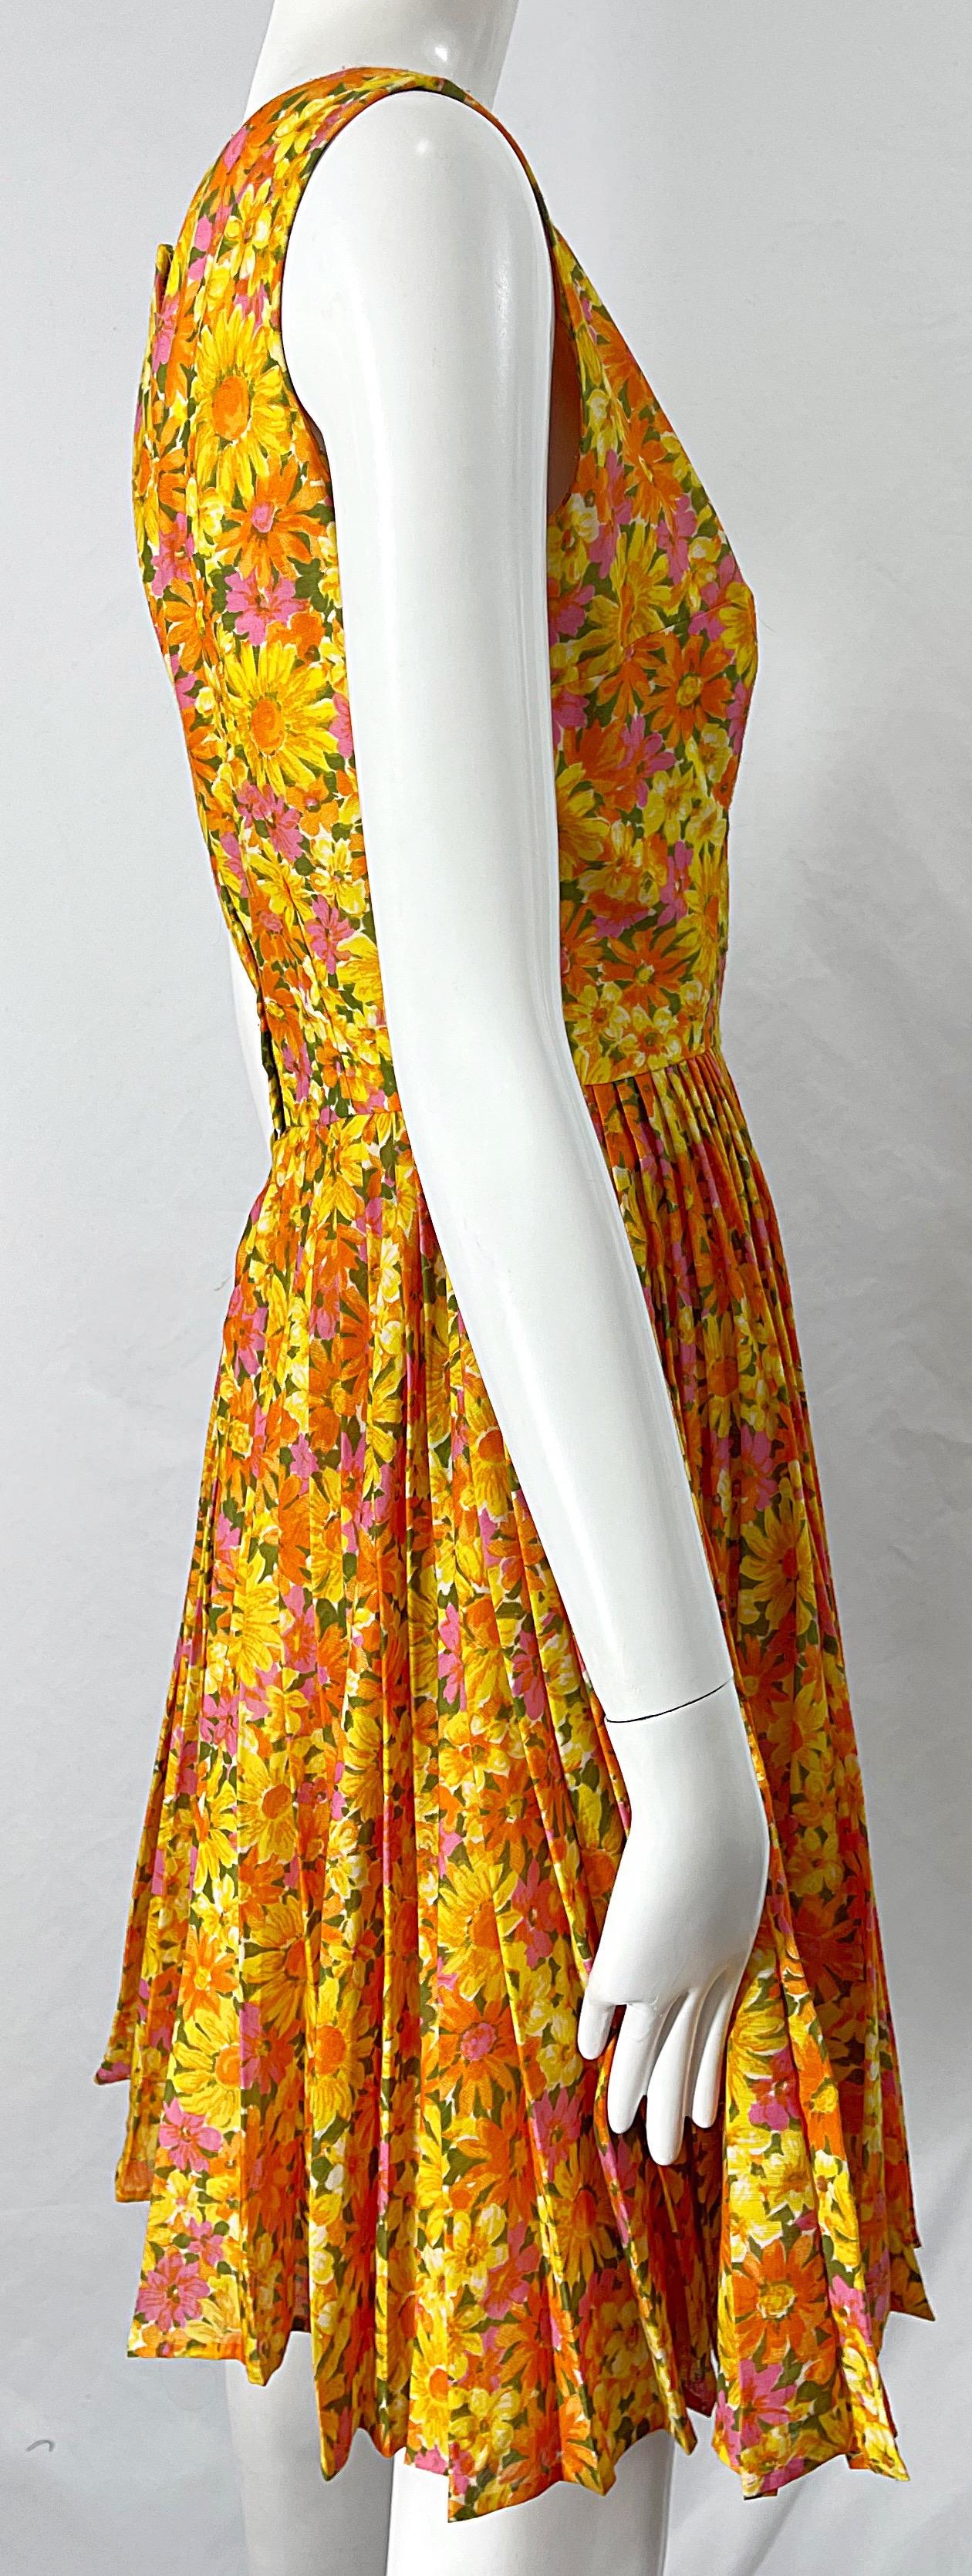 1950s Suzy Perette Yellow Pink Orange Daisy Print Cotton Vintage 50s Dress For Sale 2